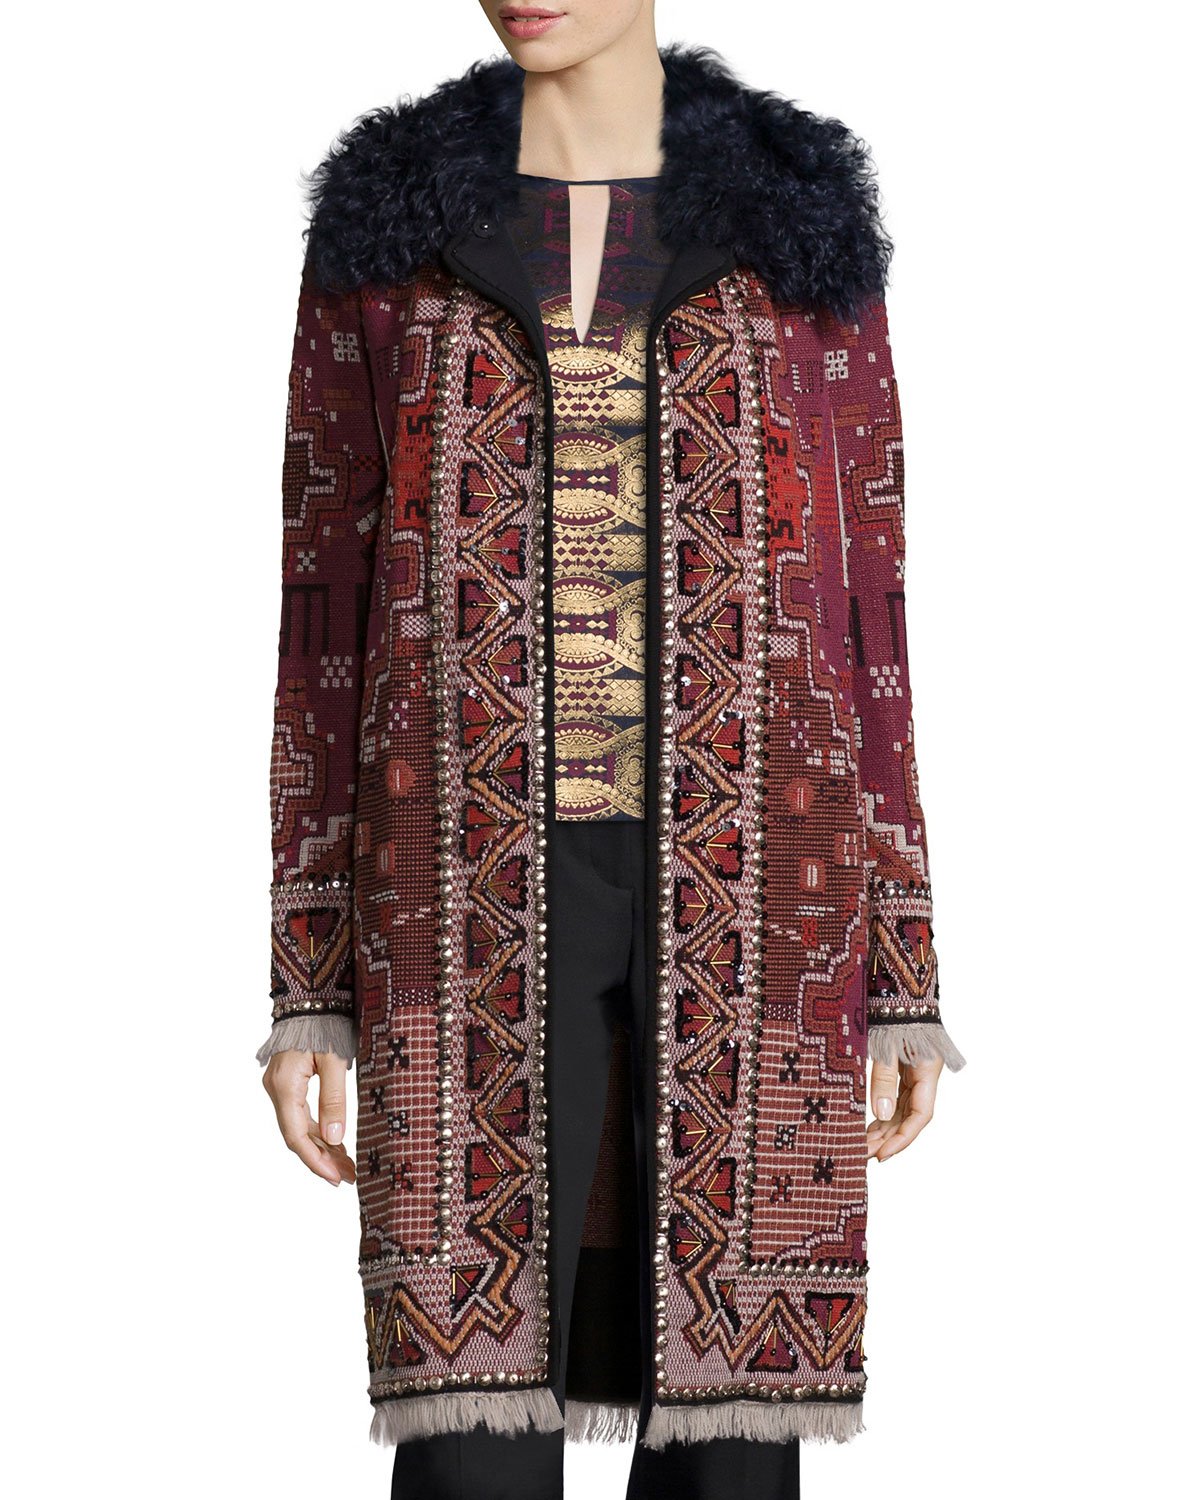 Lyst - Tory Burch Tapestry Coat W/ Fur Collar in Gray